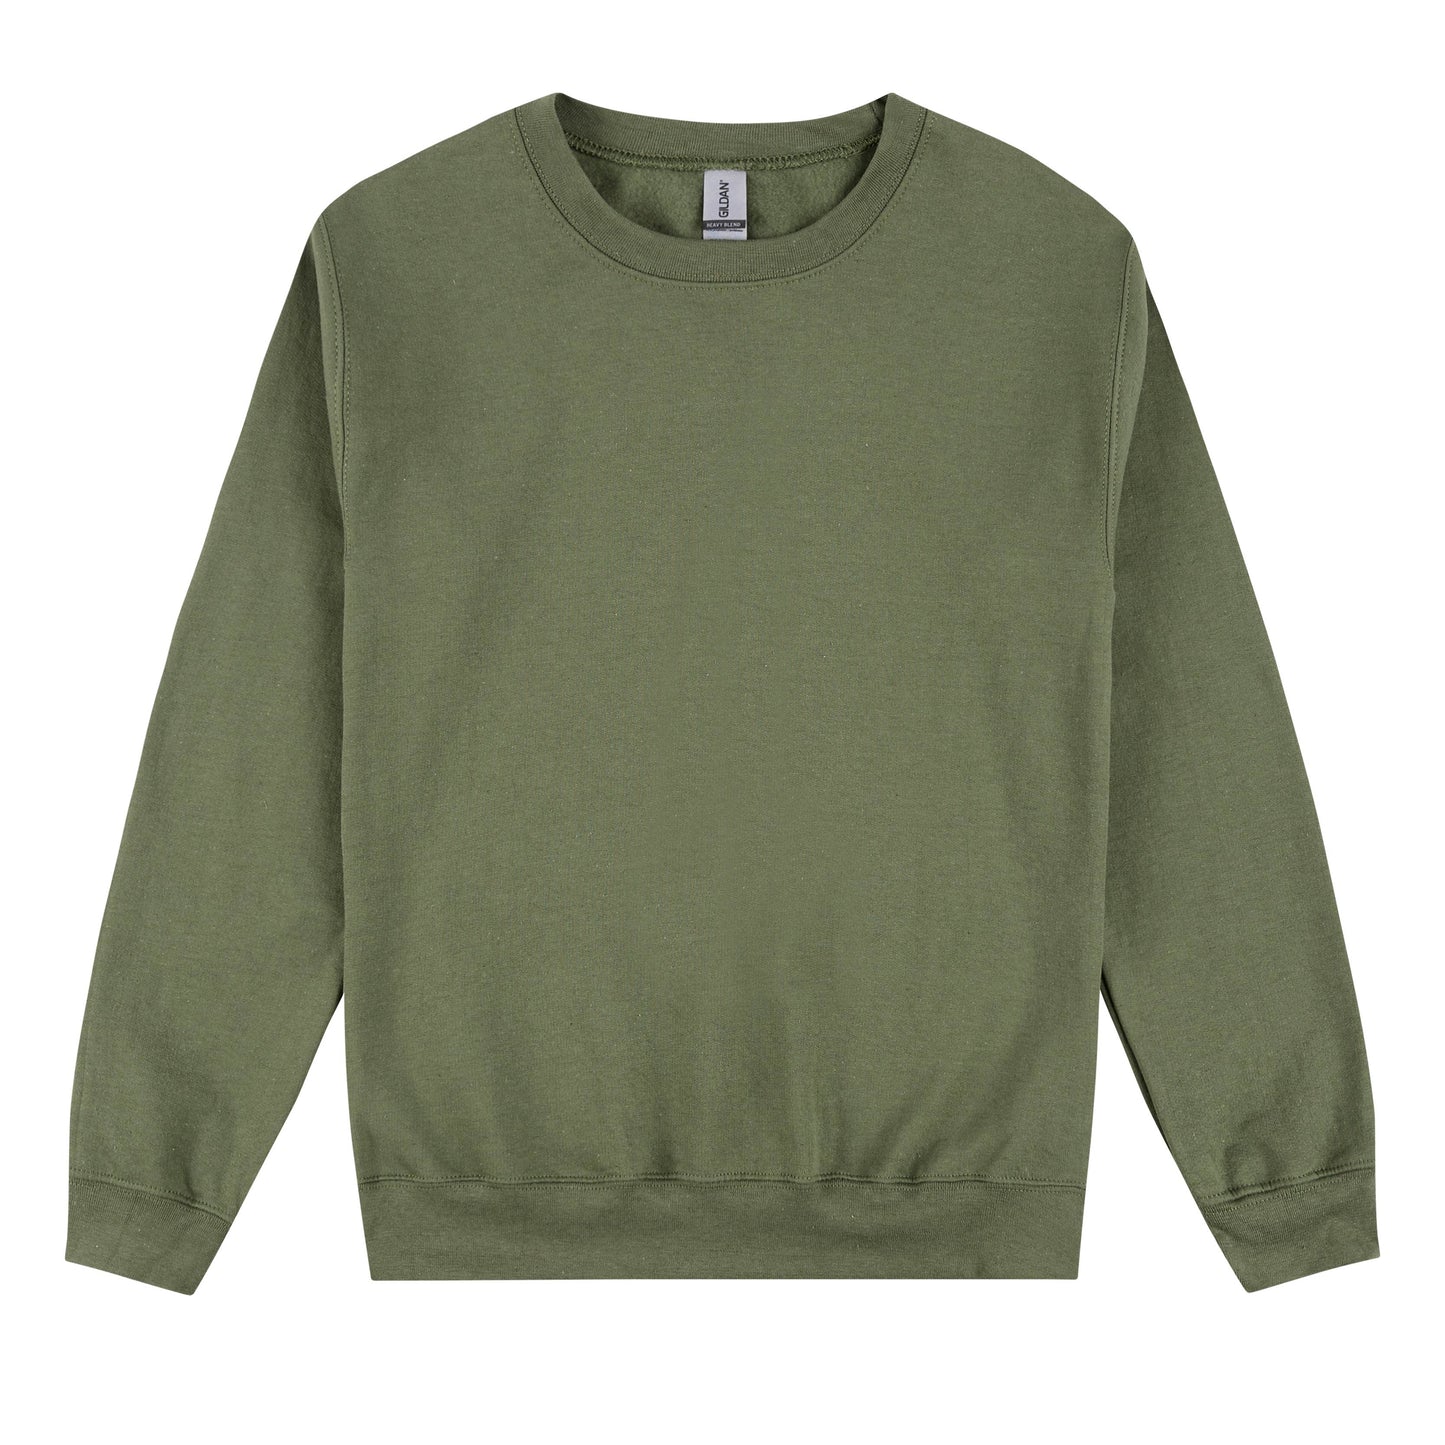 Khaki green Crewneck jumper sweater